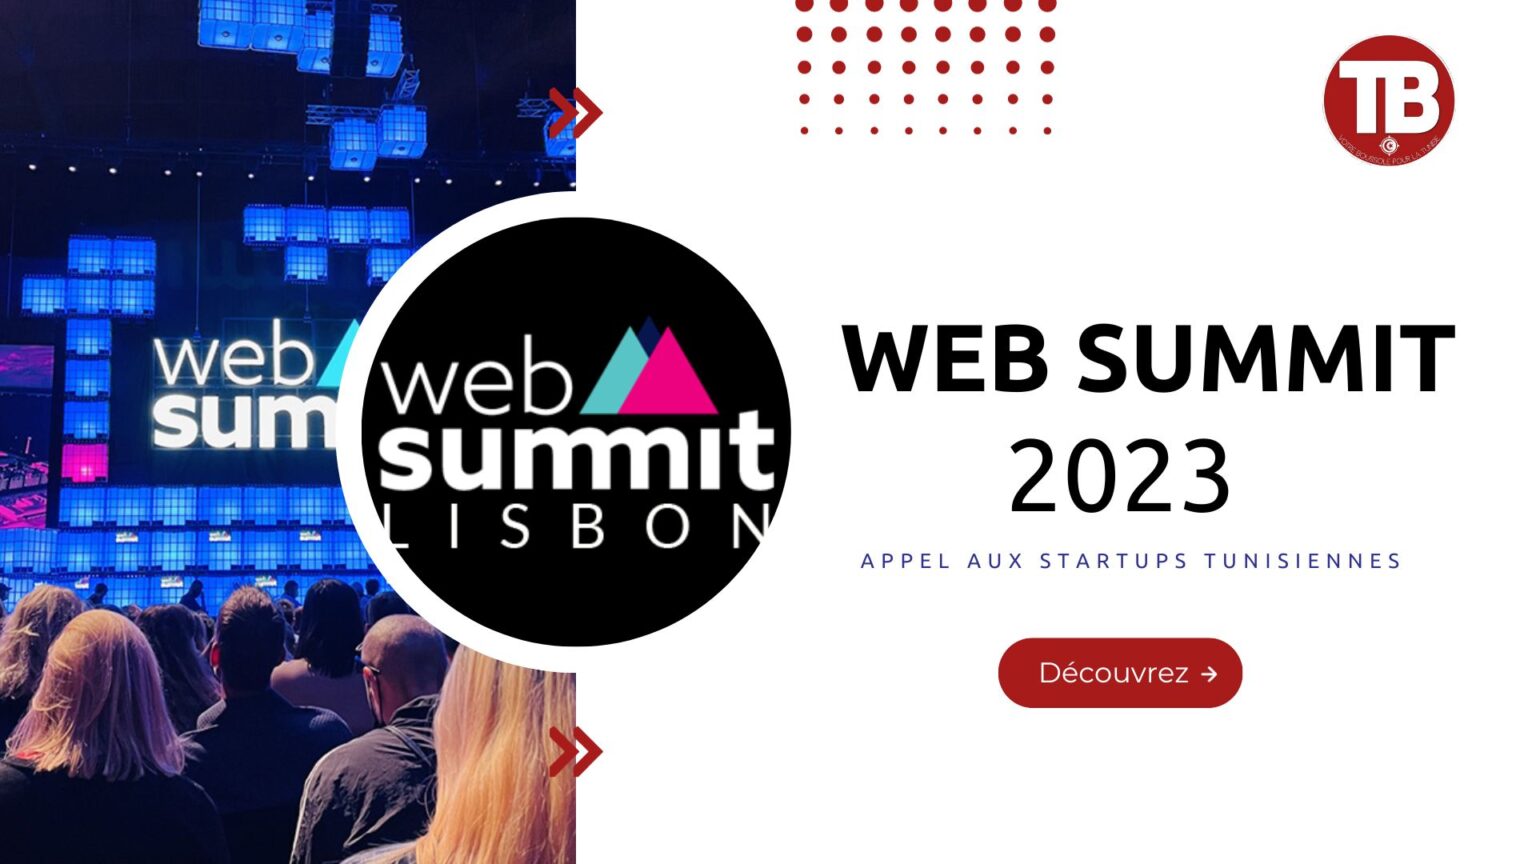 Web Summit 2023